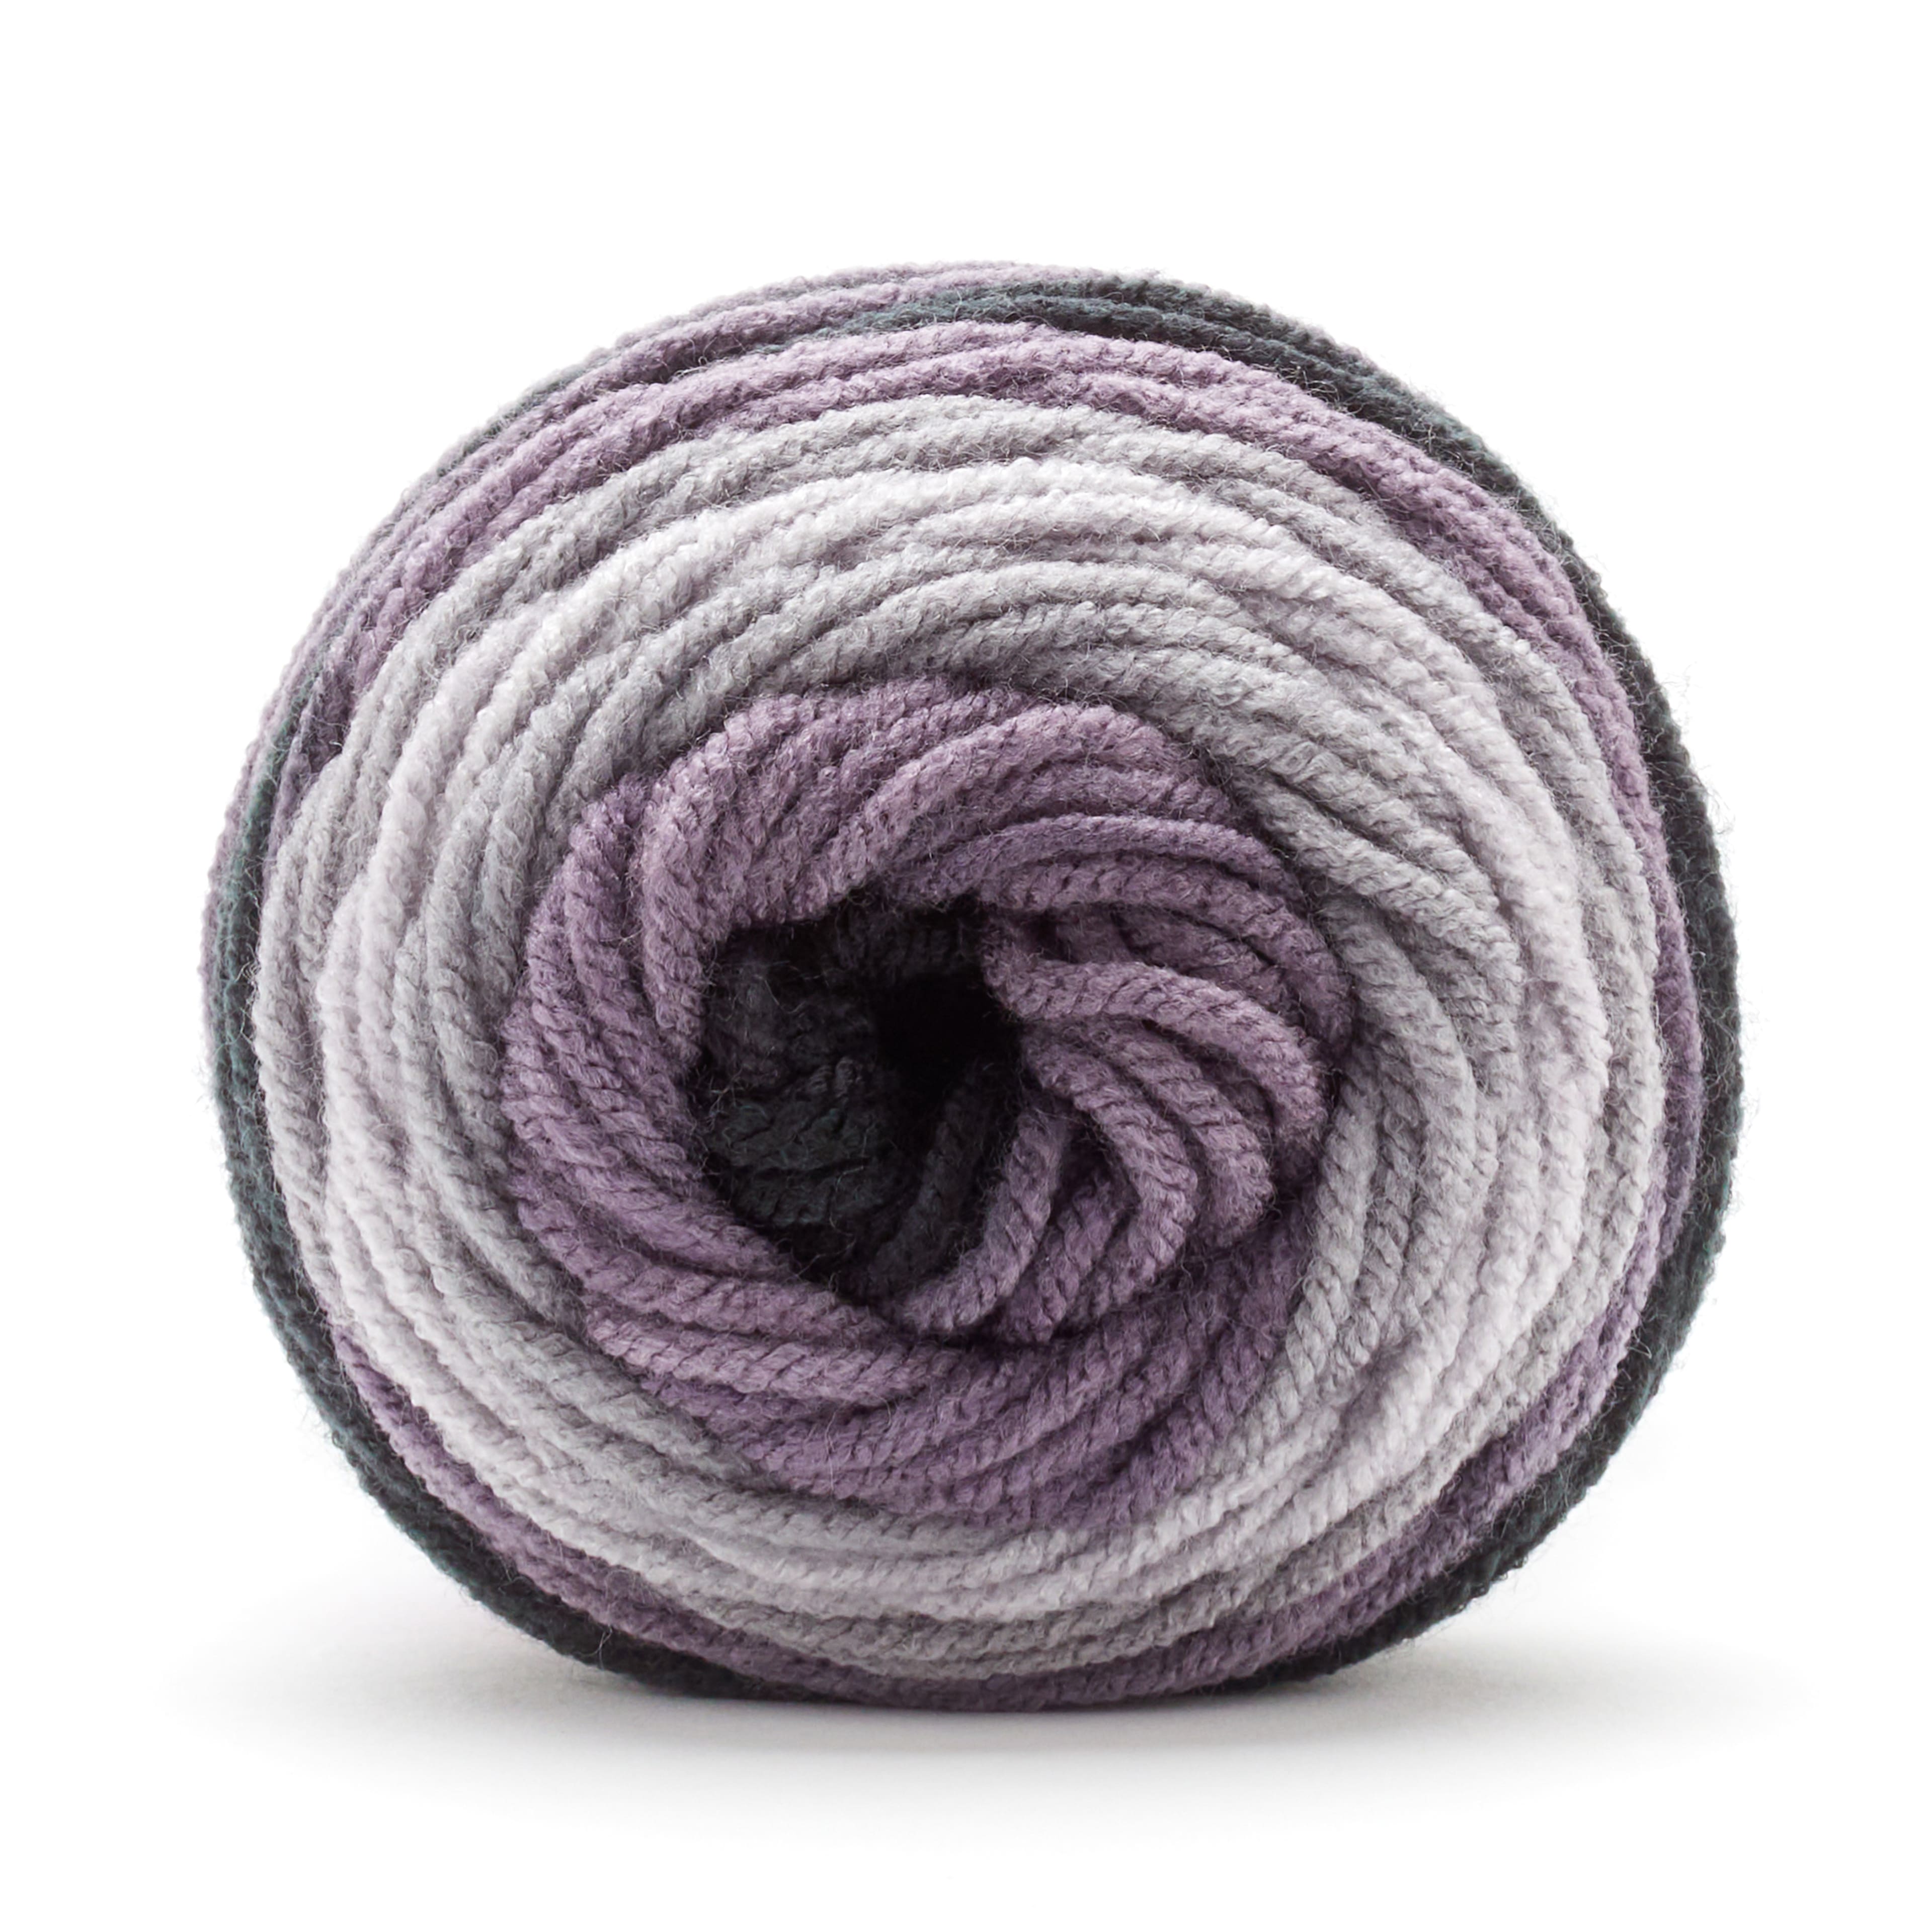 Soft Classic Multi Ombre Yarn by Loops & Threads - Multicolor Yarn